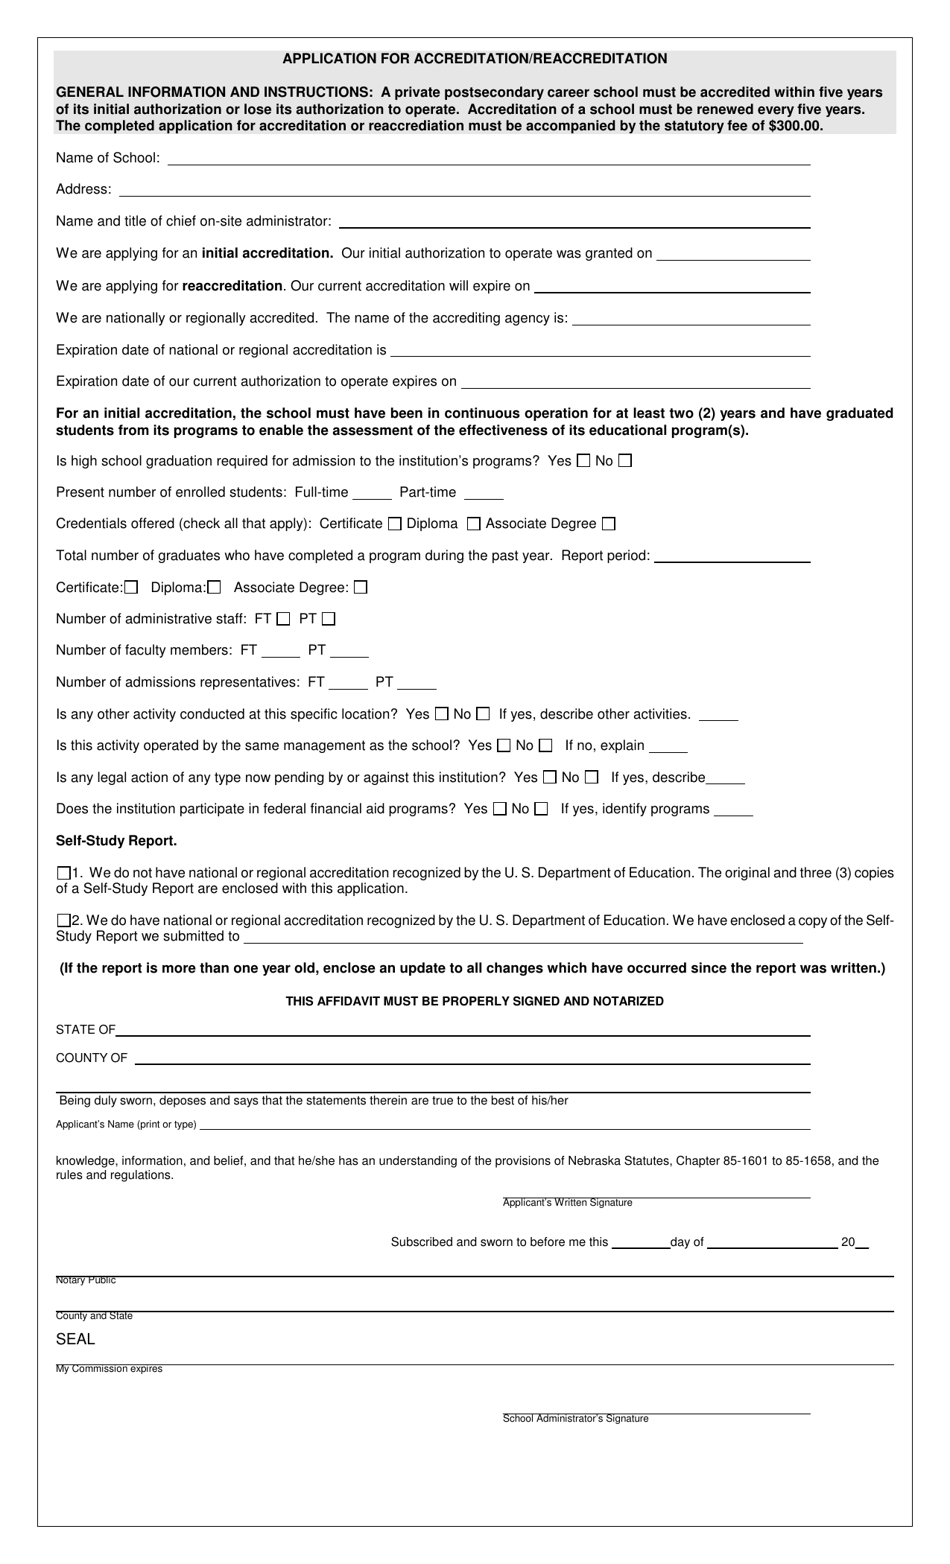 Application for Accreditation / Reaccreditation - Nebraska, Page 1